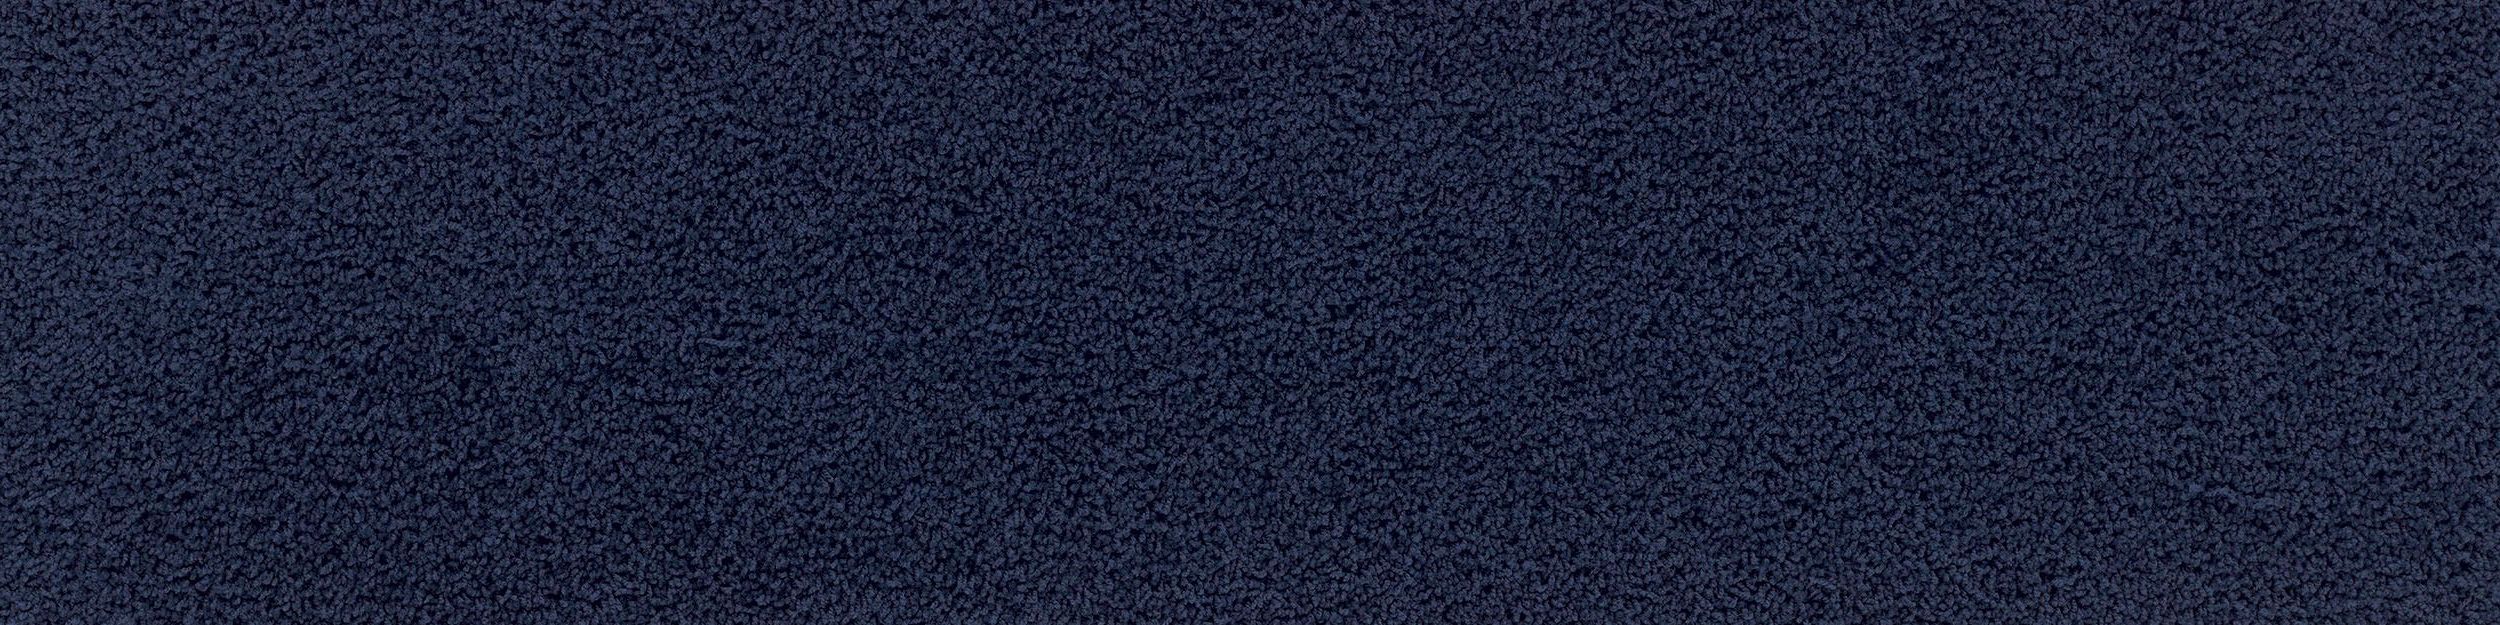 HN830 Carpet Tile In Cobalt numéro d’image 2